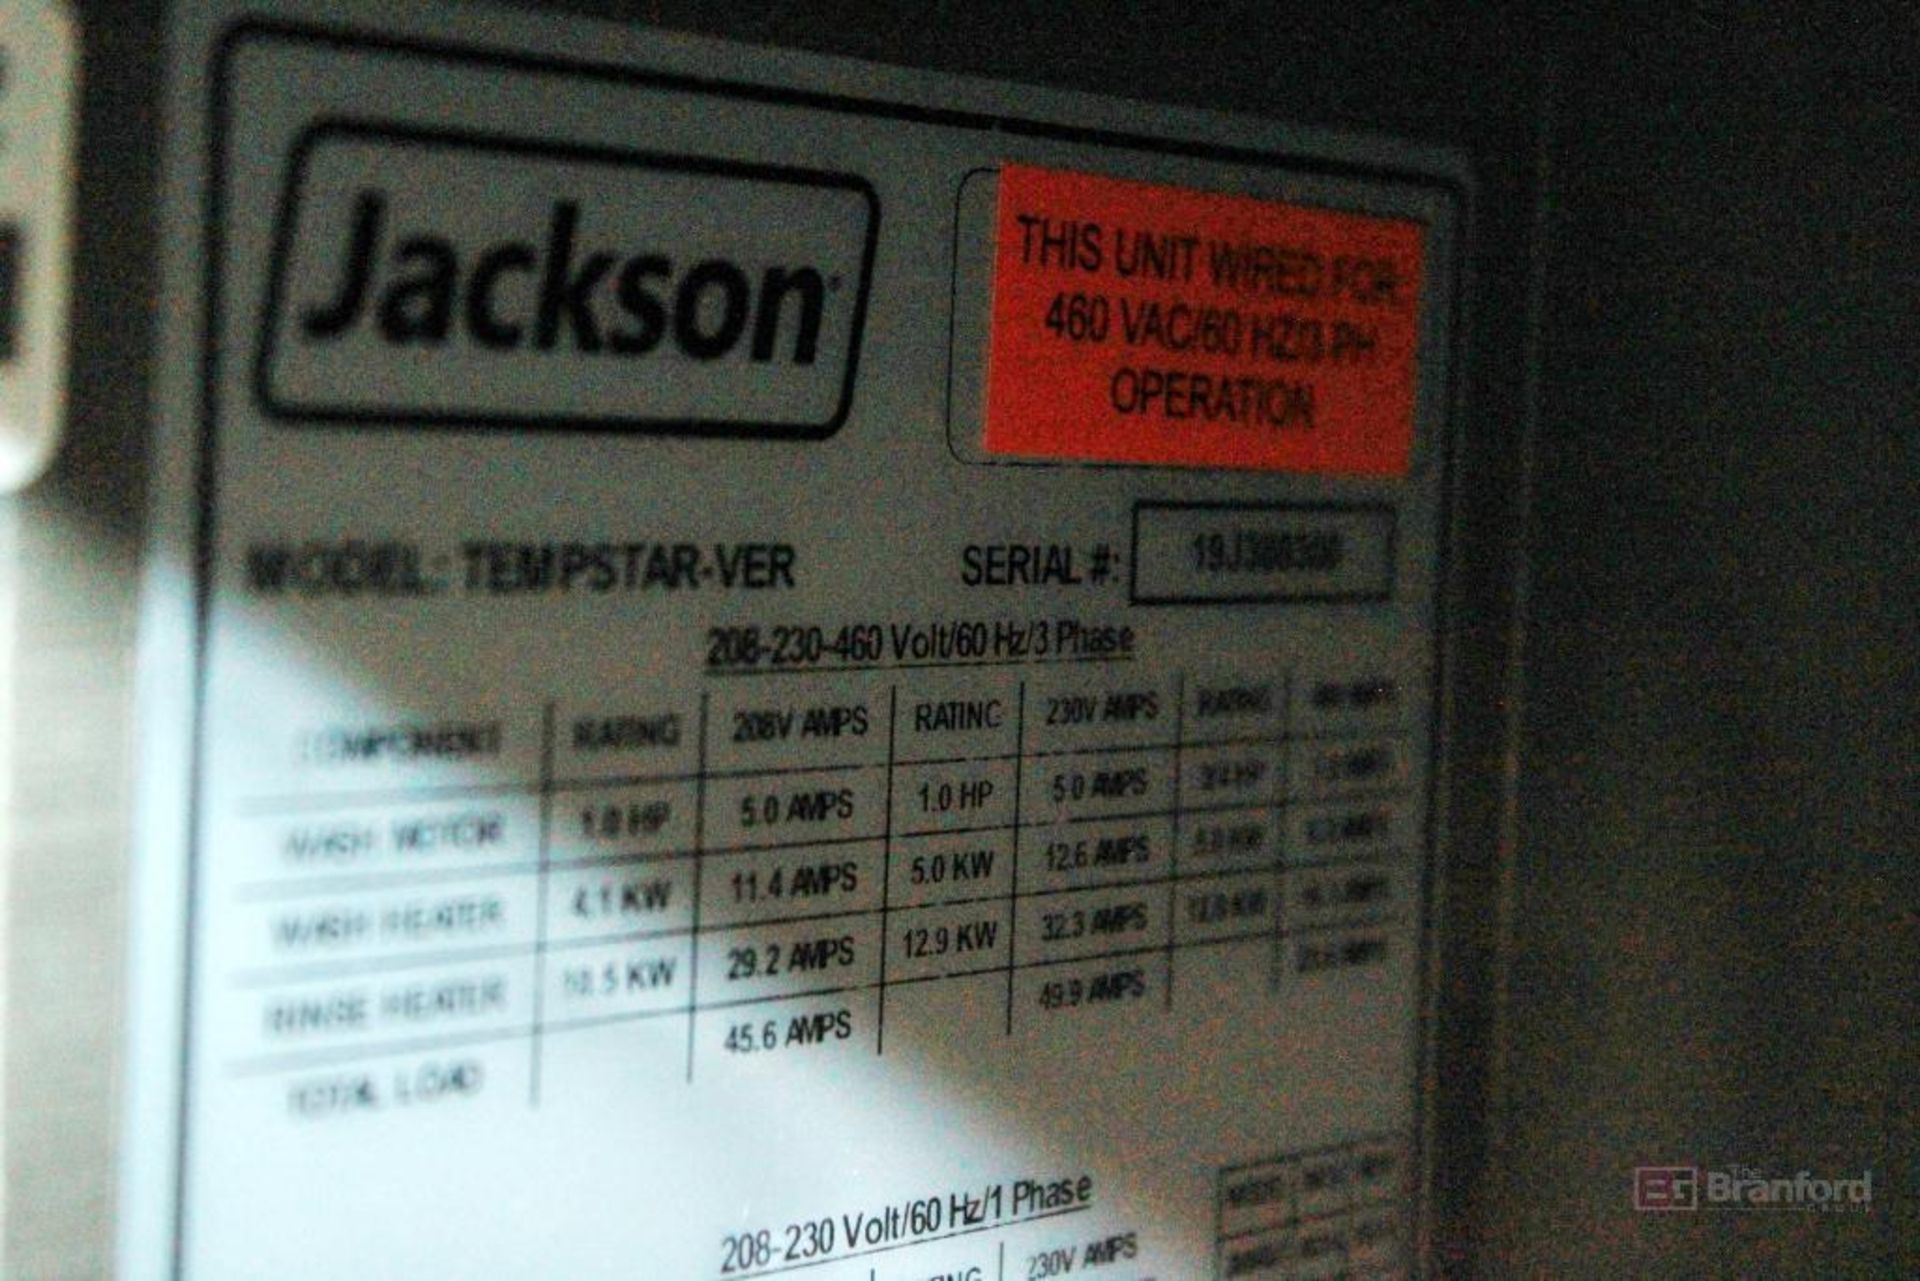 Jackson TEMPSTAR Commercial Dishwasher Model Tempstar-VER - Bild 6 aus 10